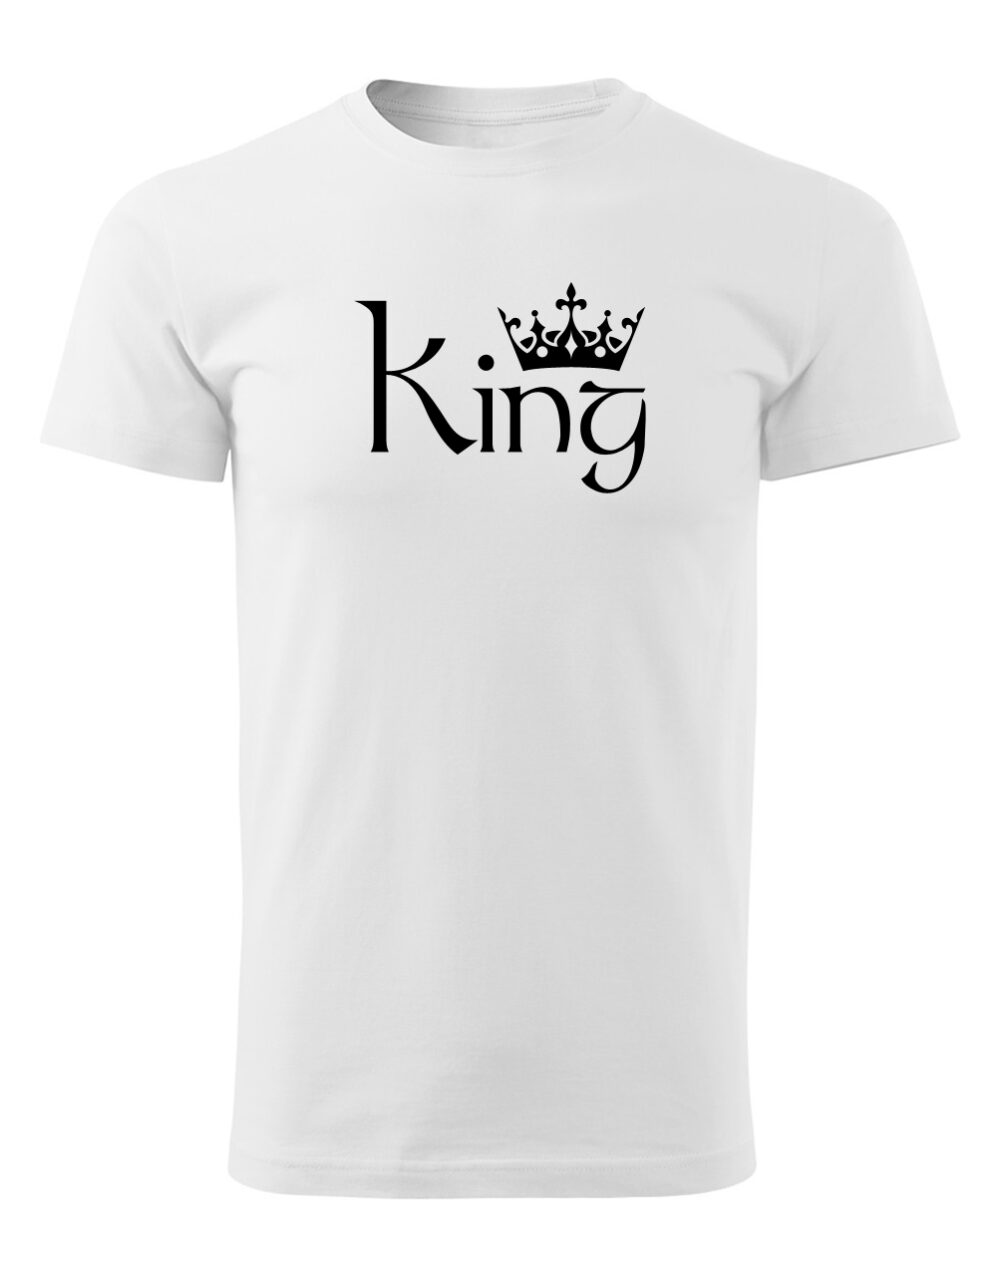 Pásnké tričko s potiskem King bílá